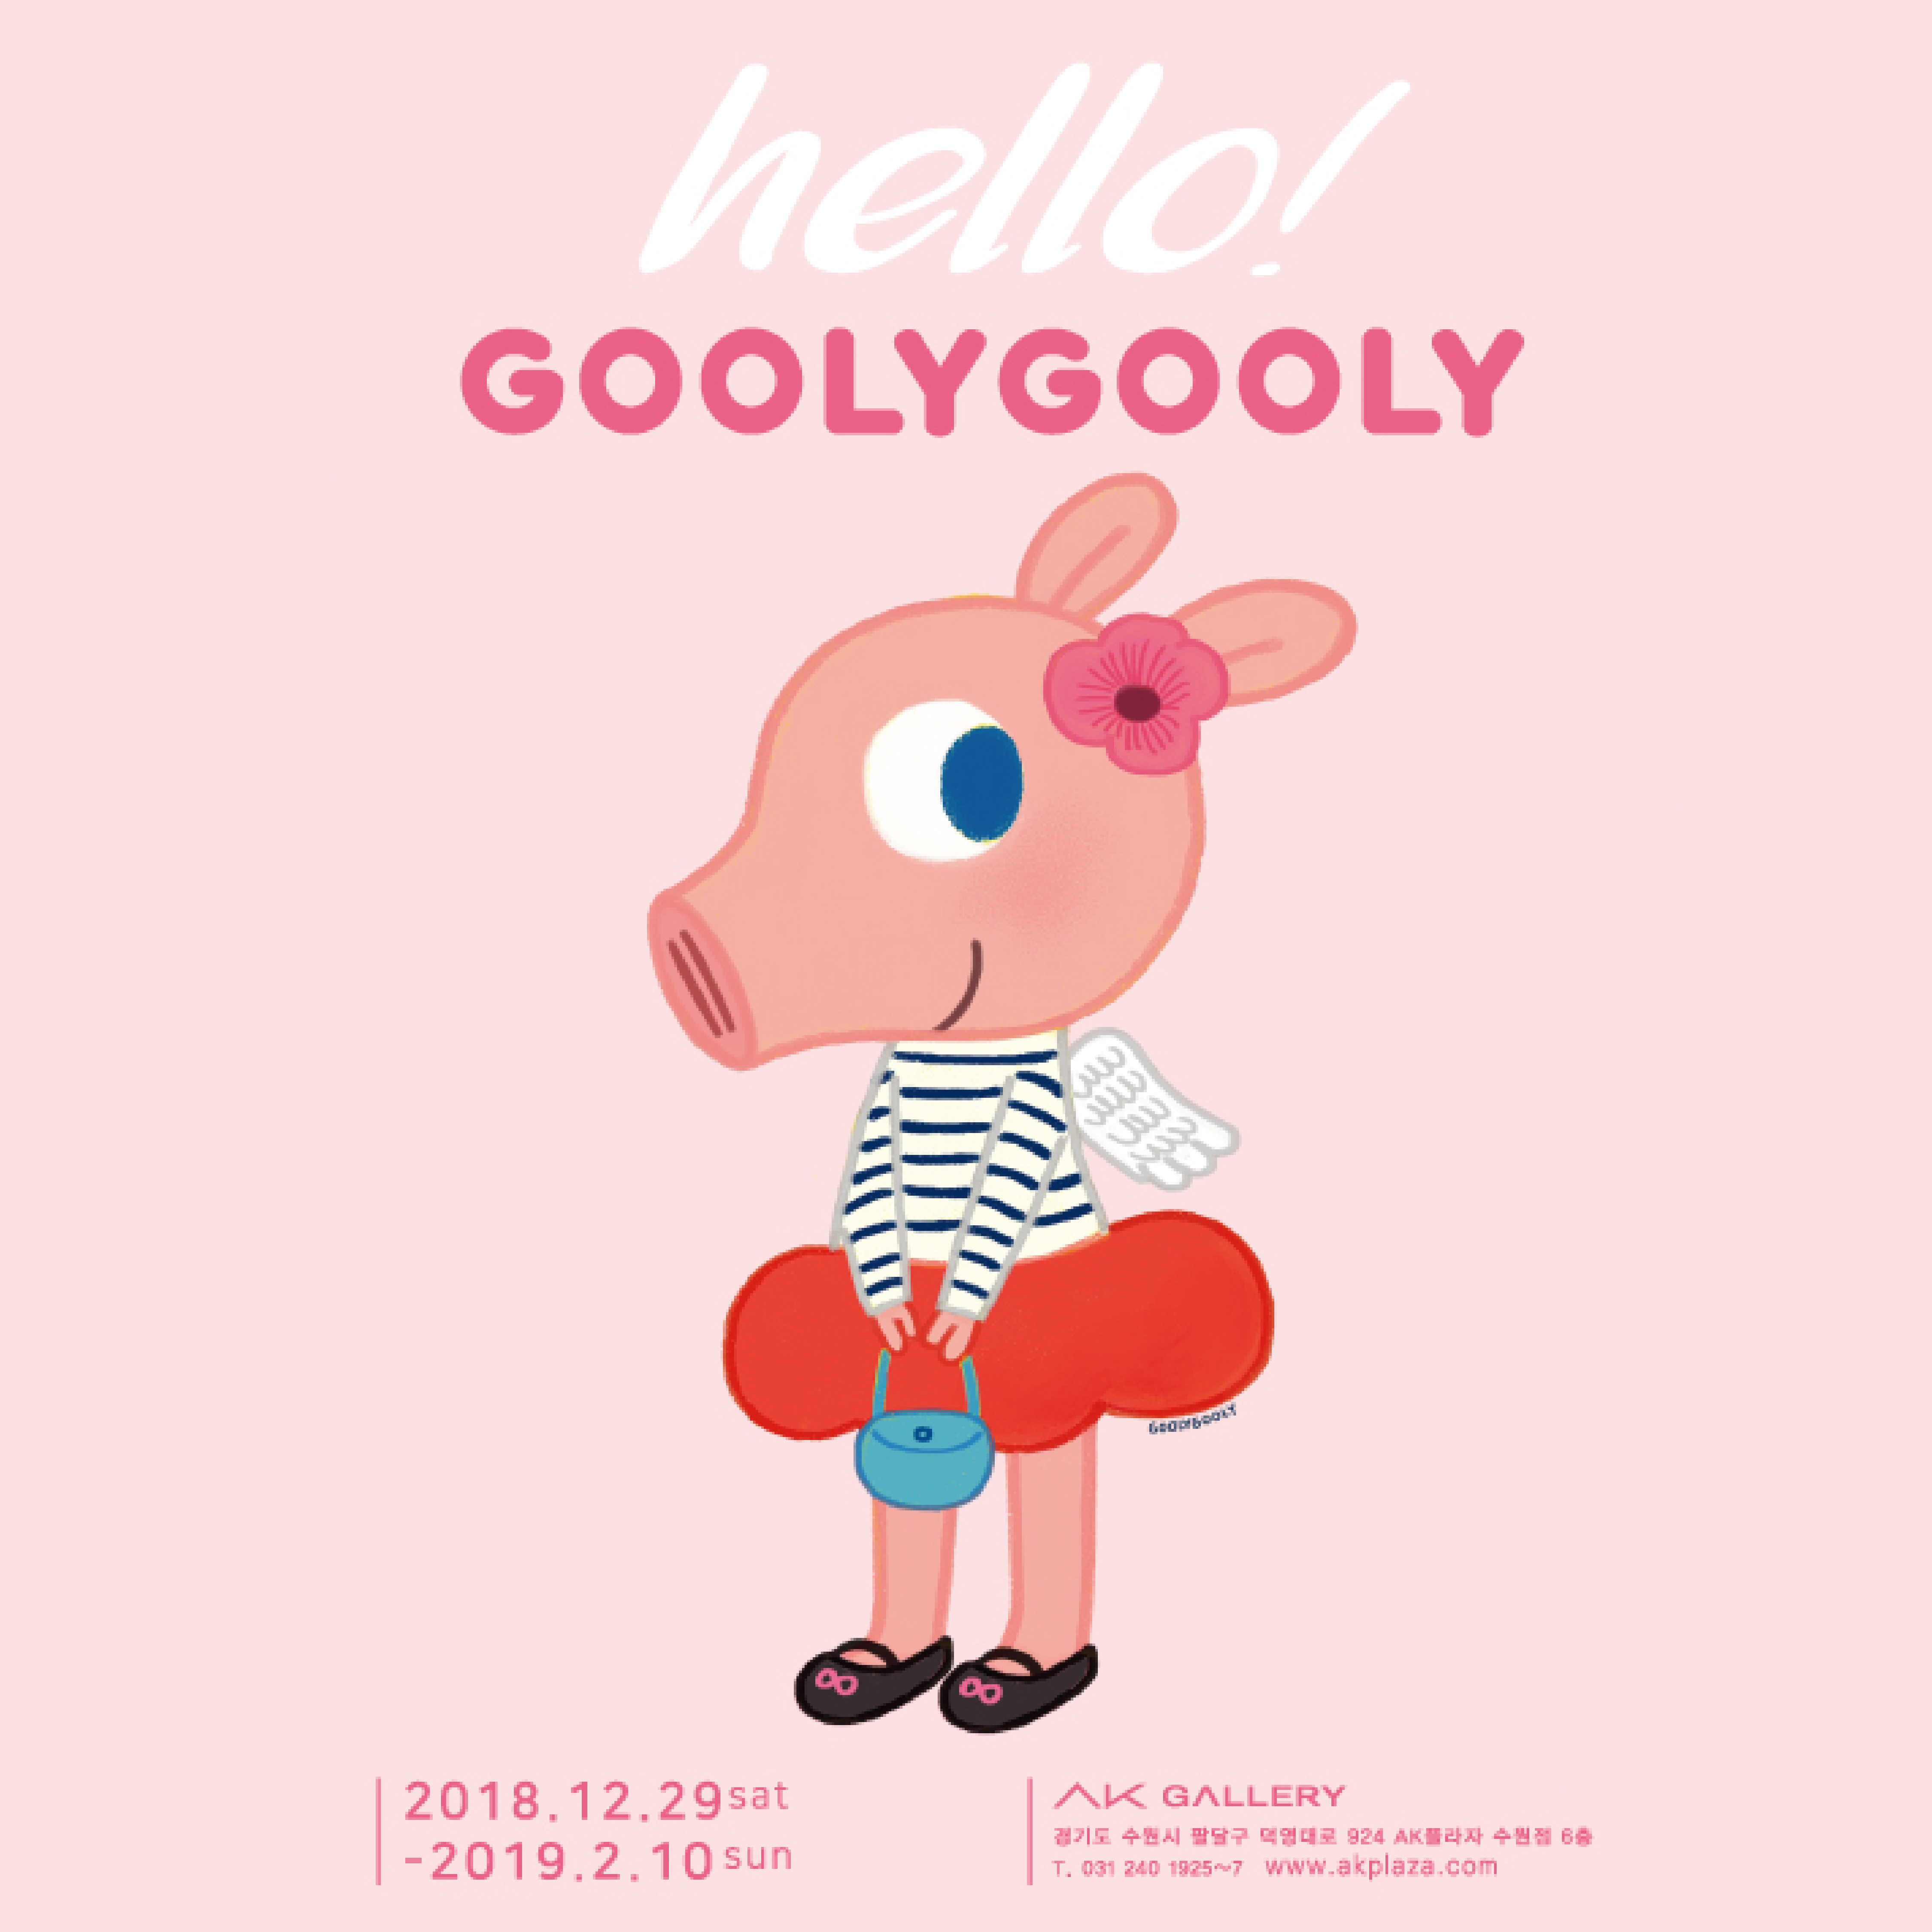 Hello! GOOLYGOOLY 展 (2018.12.29~2018.2.10)